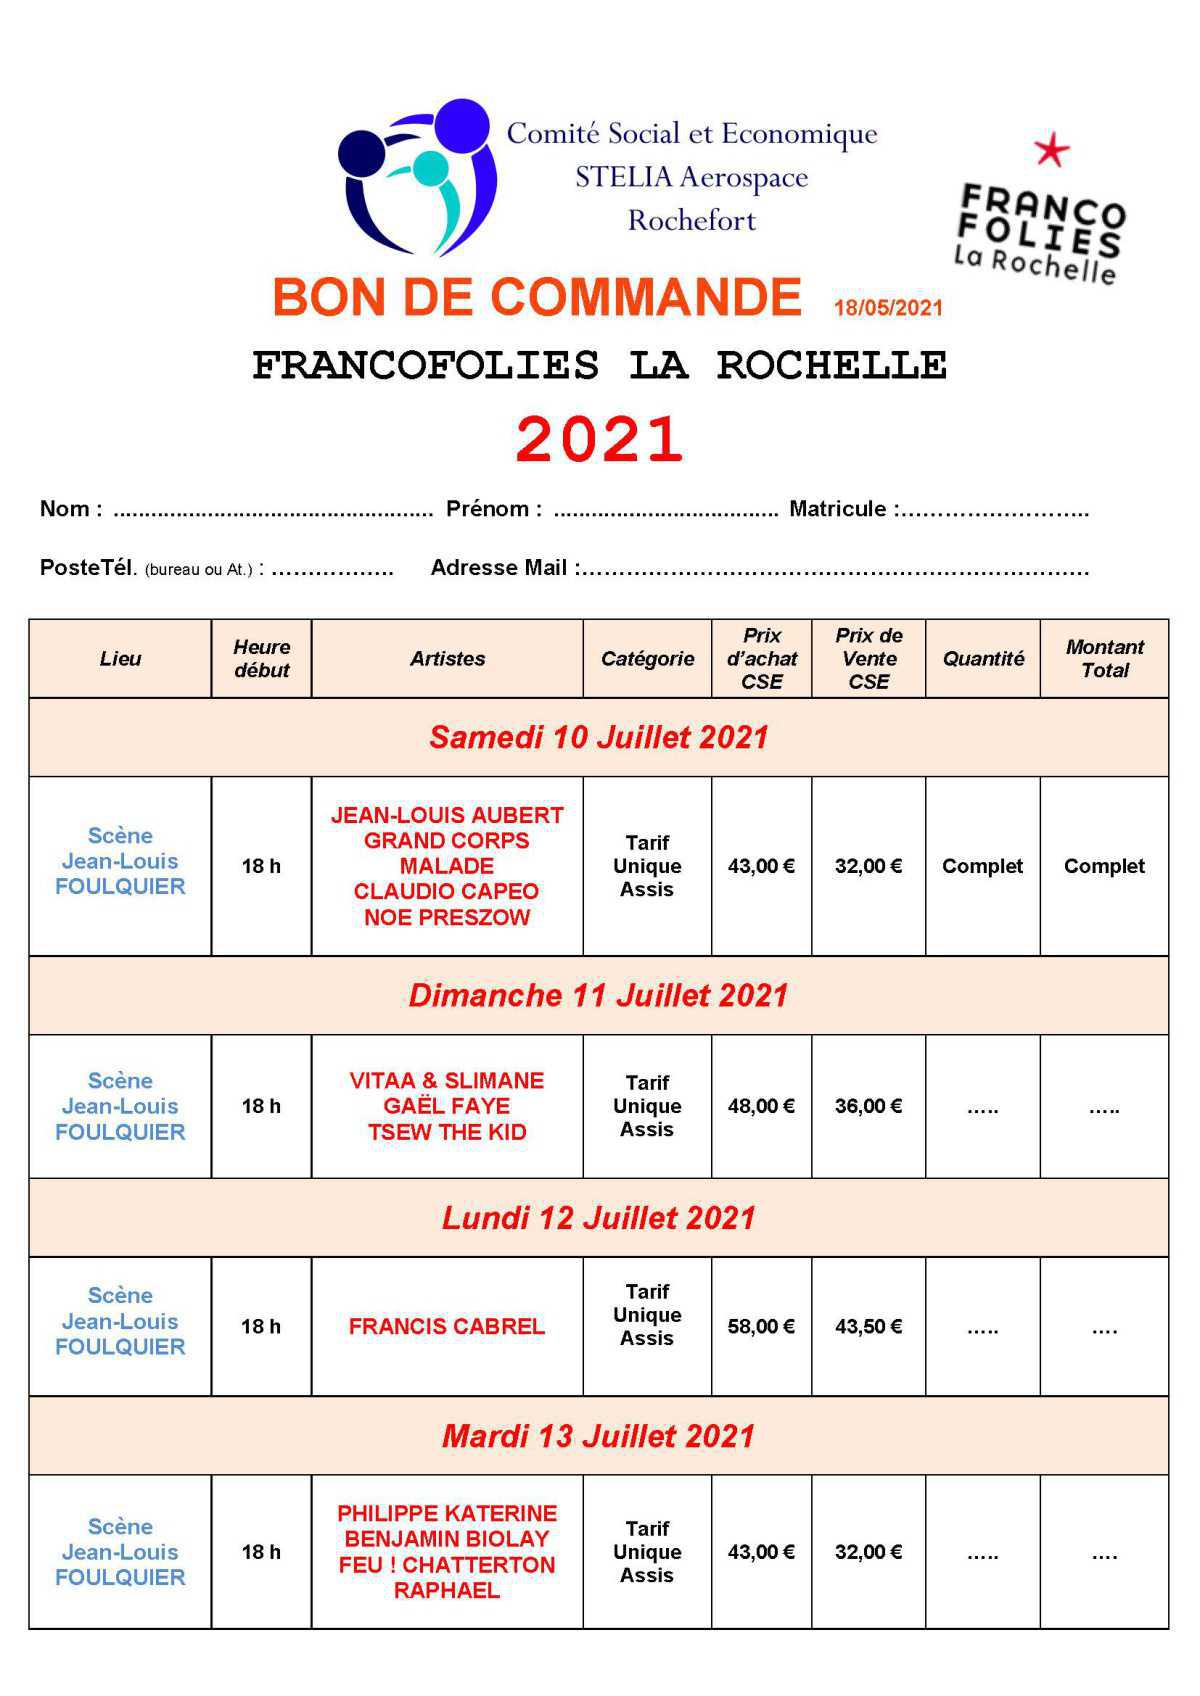 Francofolies 2021